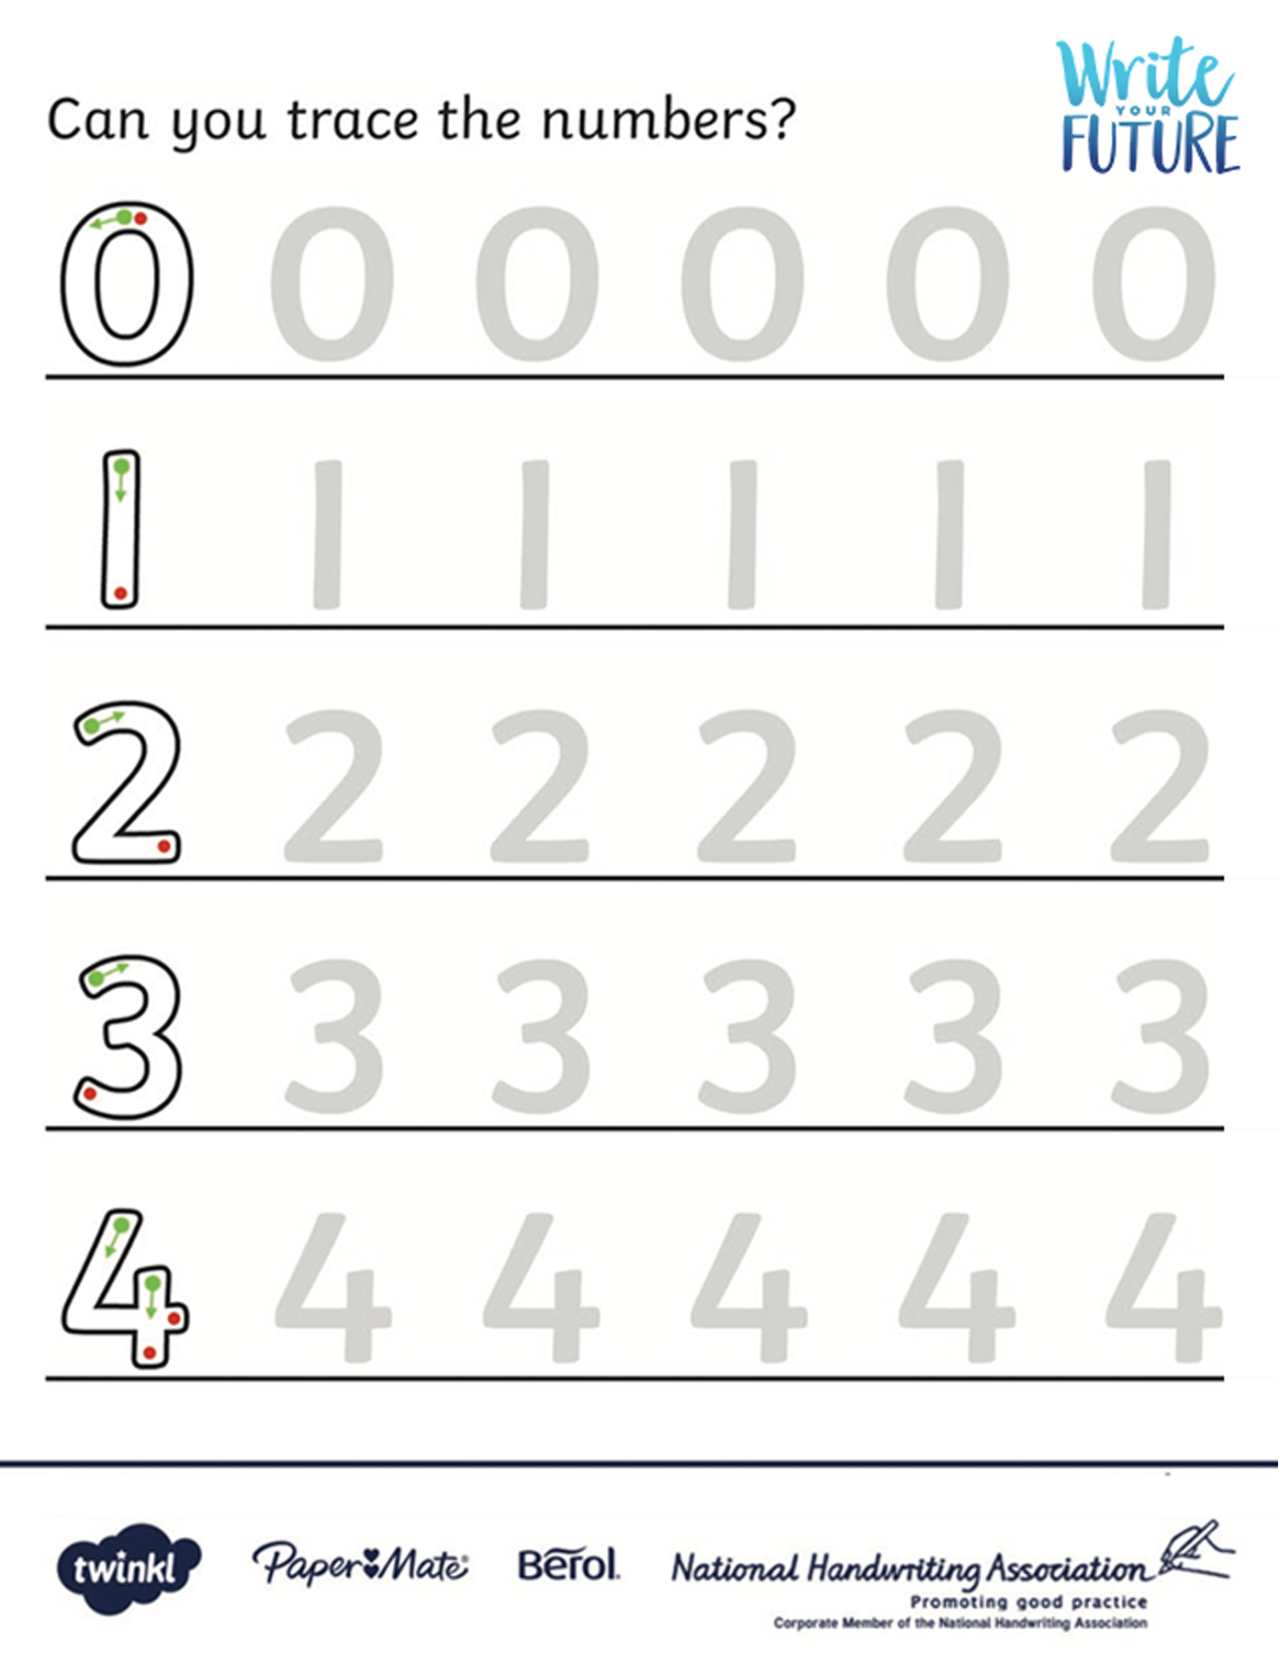 Number Formation Worksheet Activity Sheet Number Formation Images and